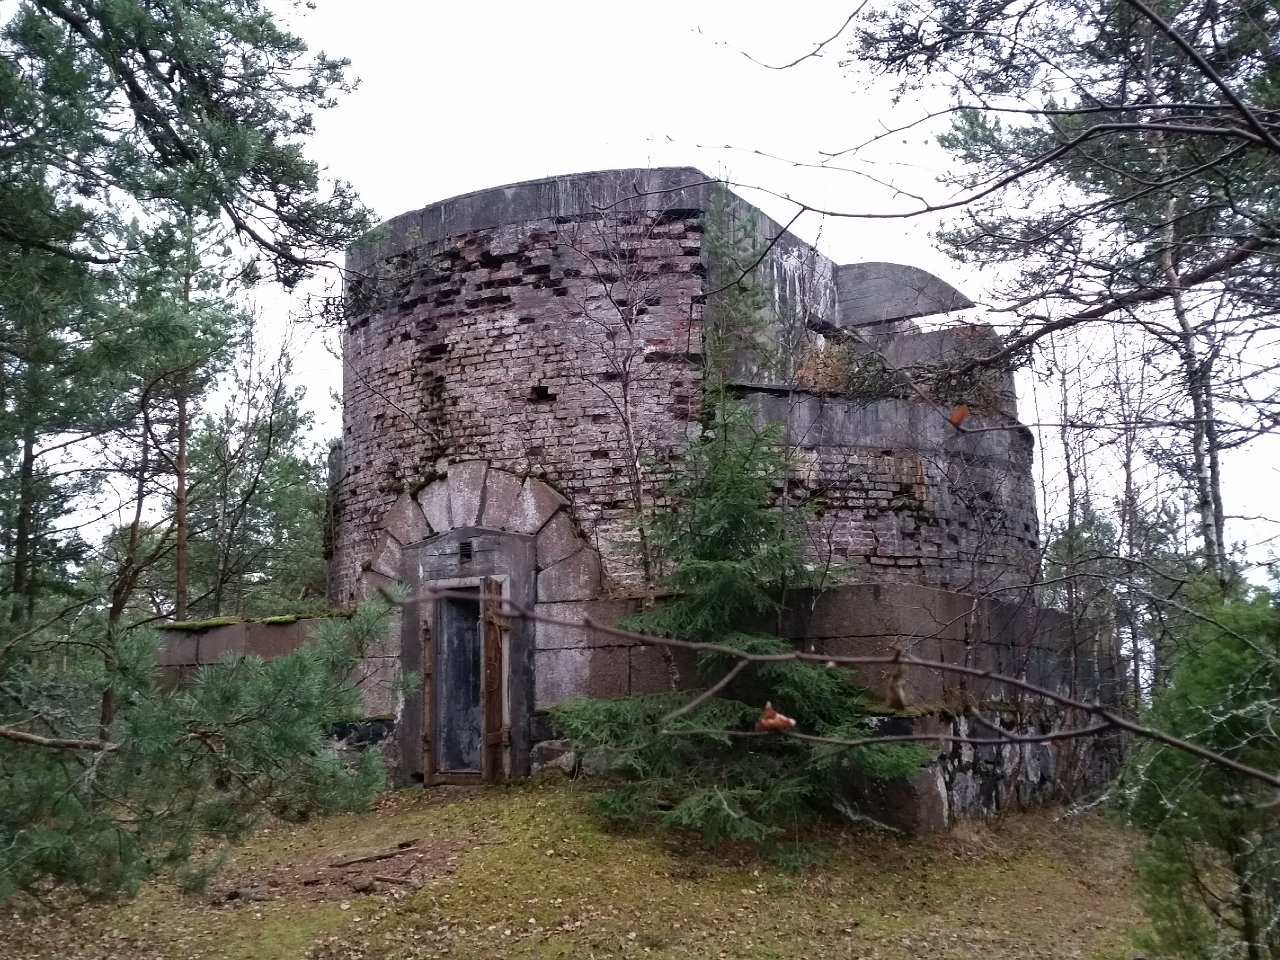 20141114_141318.jpg - Glosholmen. Majakan rauniot, sittemmin tulenjohtotorni.